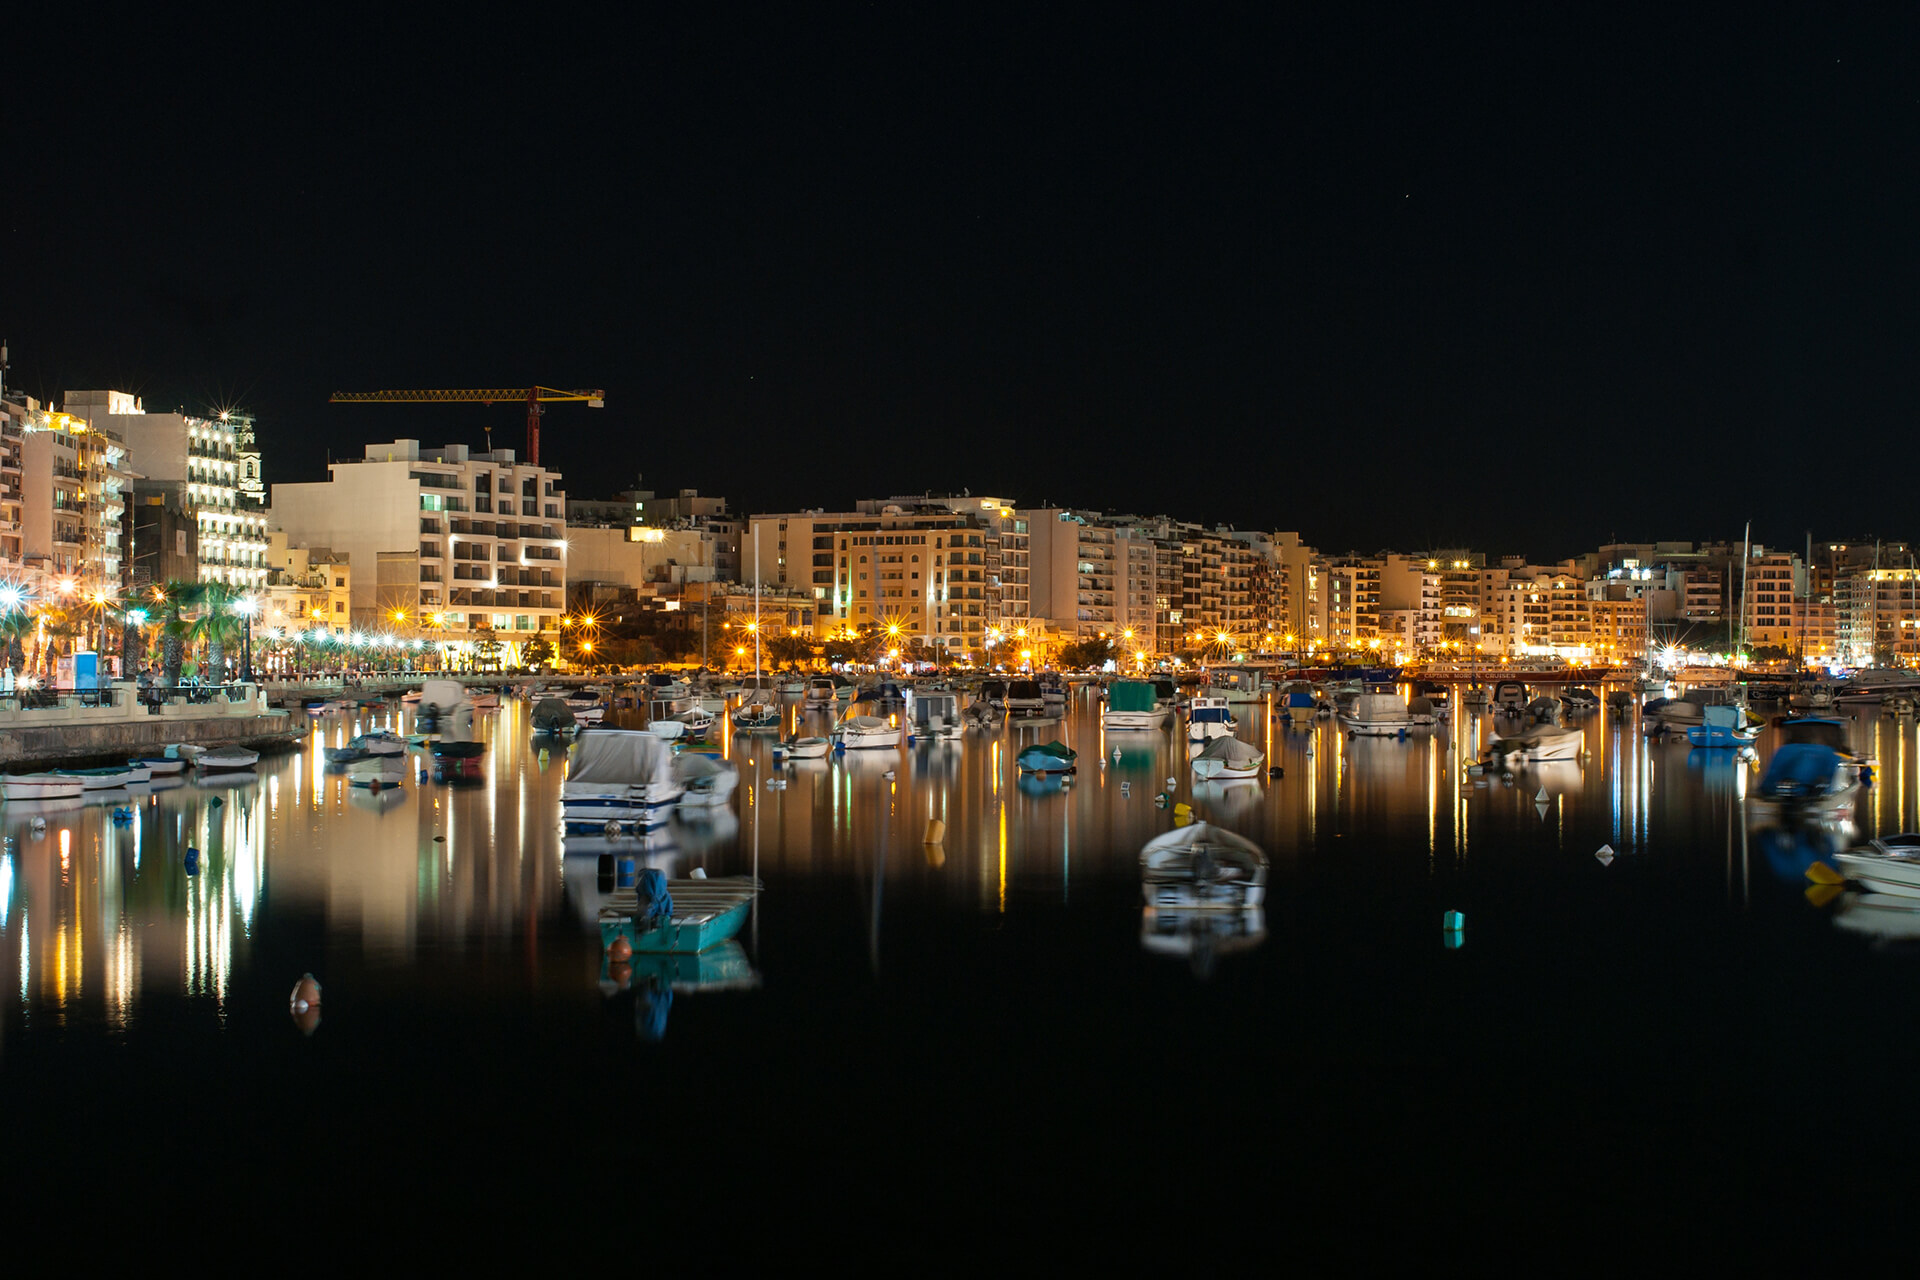 Malta at night